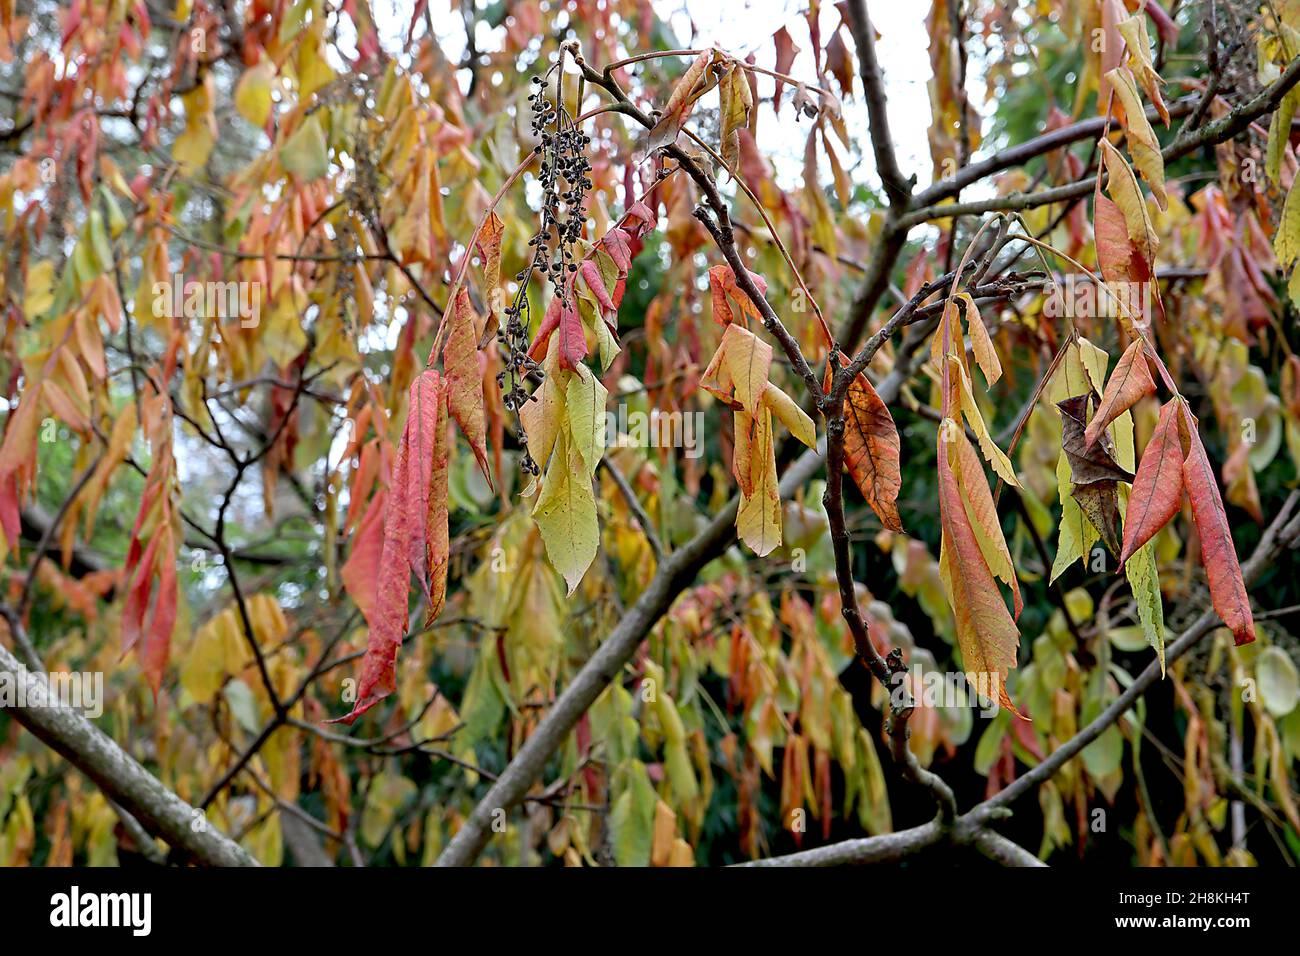 rhus-javanica-var-roxburghii-chinese-sumac-pendulous-brown-seed-head-racemes-and-yellow-orange-red-and-mid-green-leaves-november-england-uk-2H8KH4T.jpg